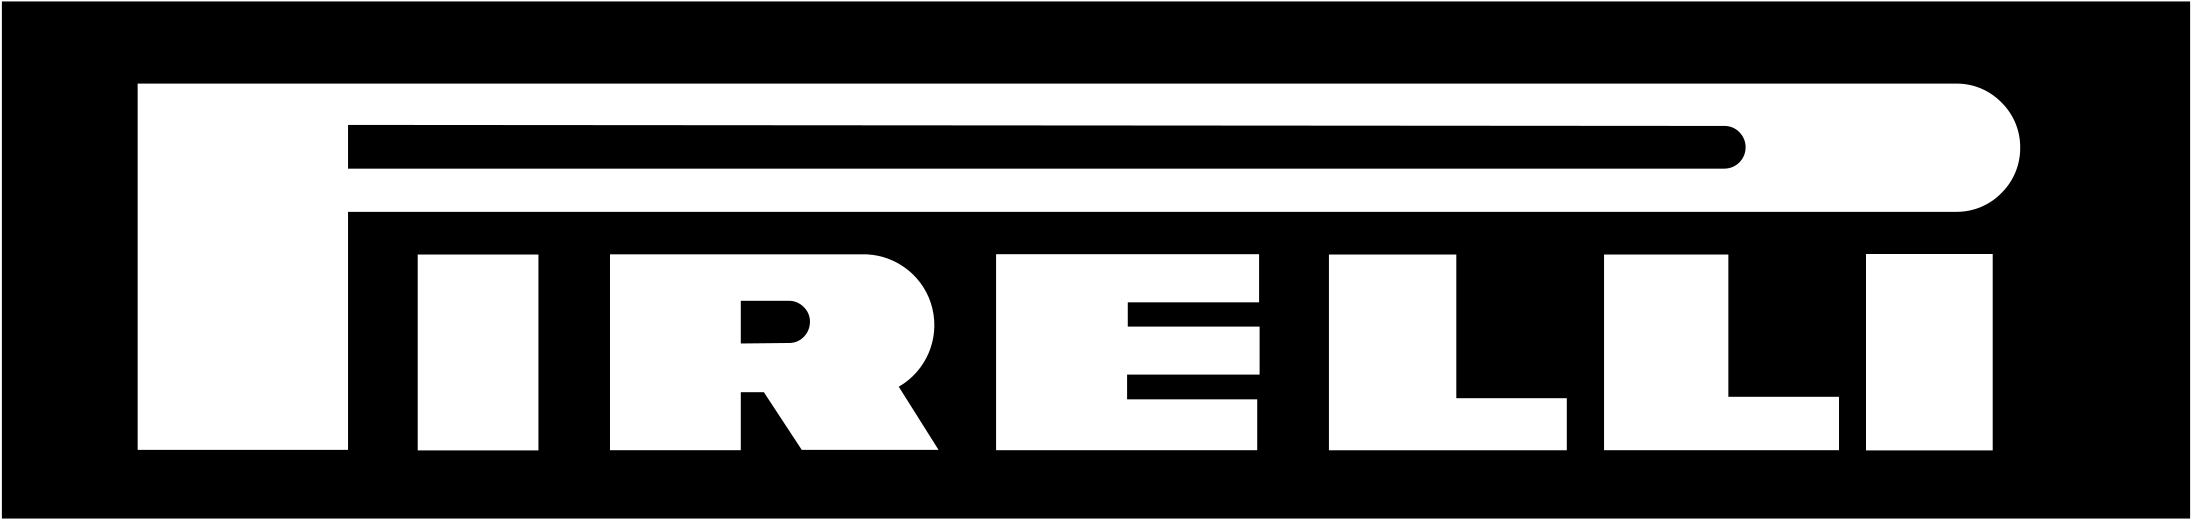 Pirelli Logo - Pluspng